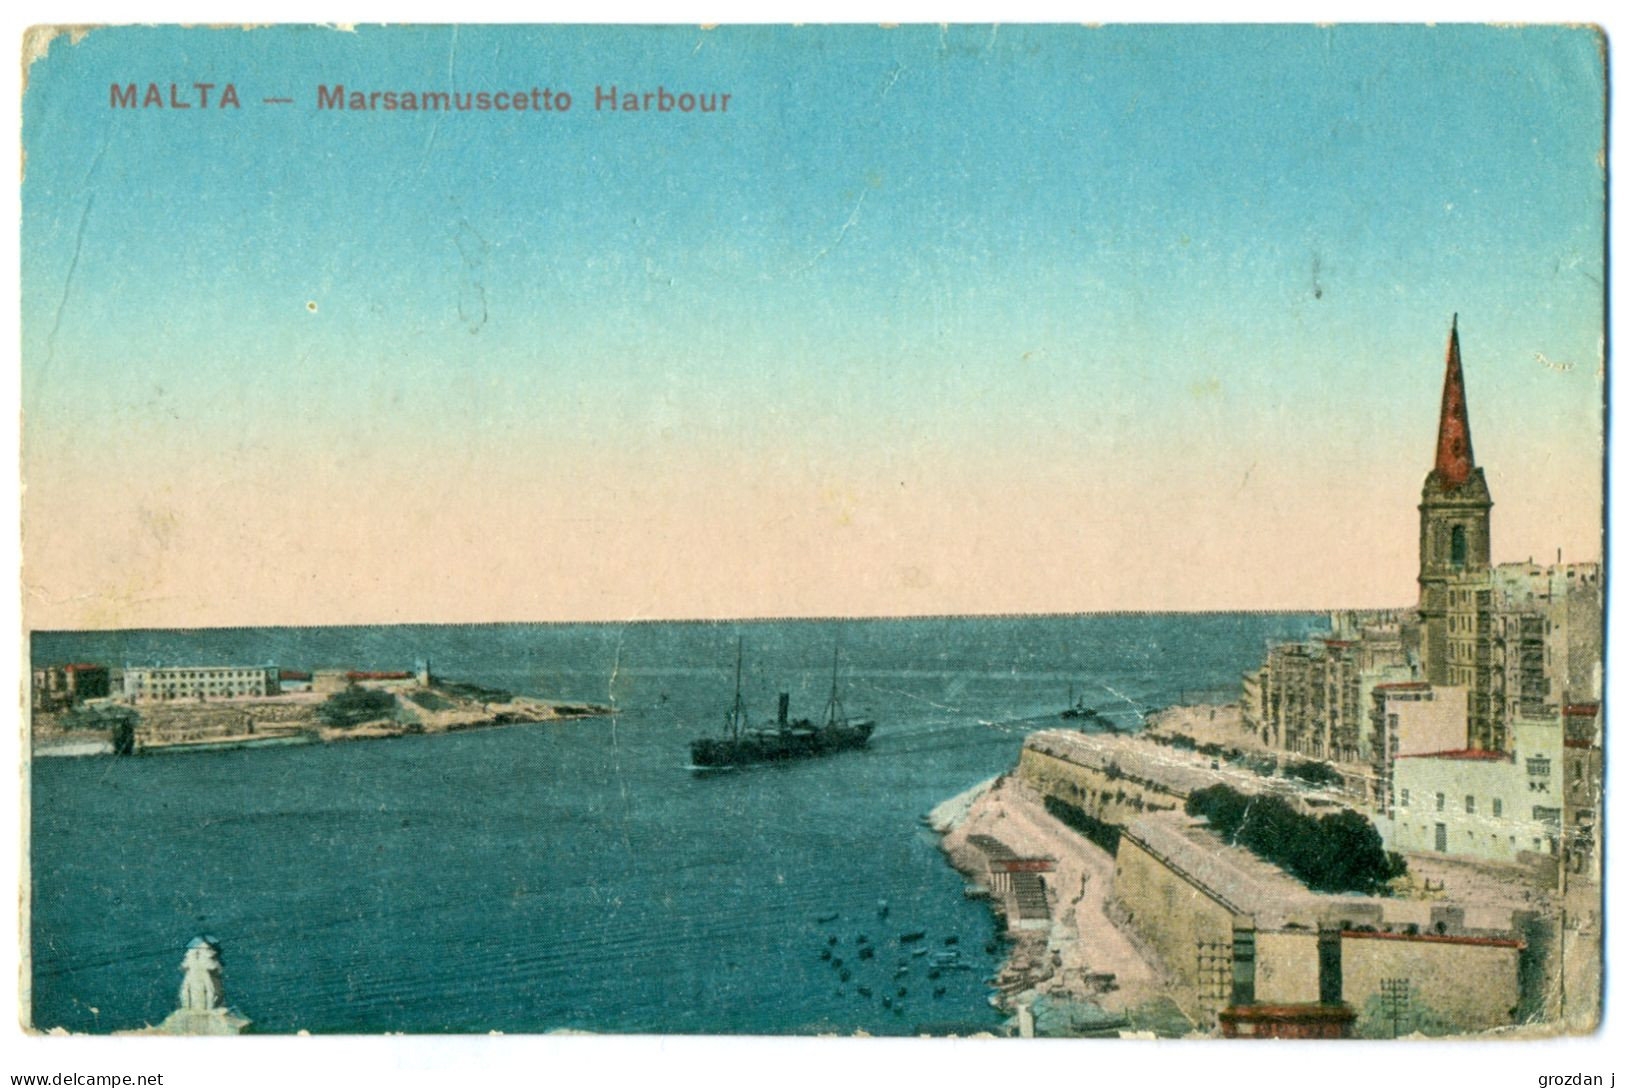 Malta, Marsamuscetto Harbour - Malte